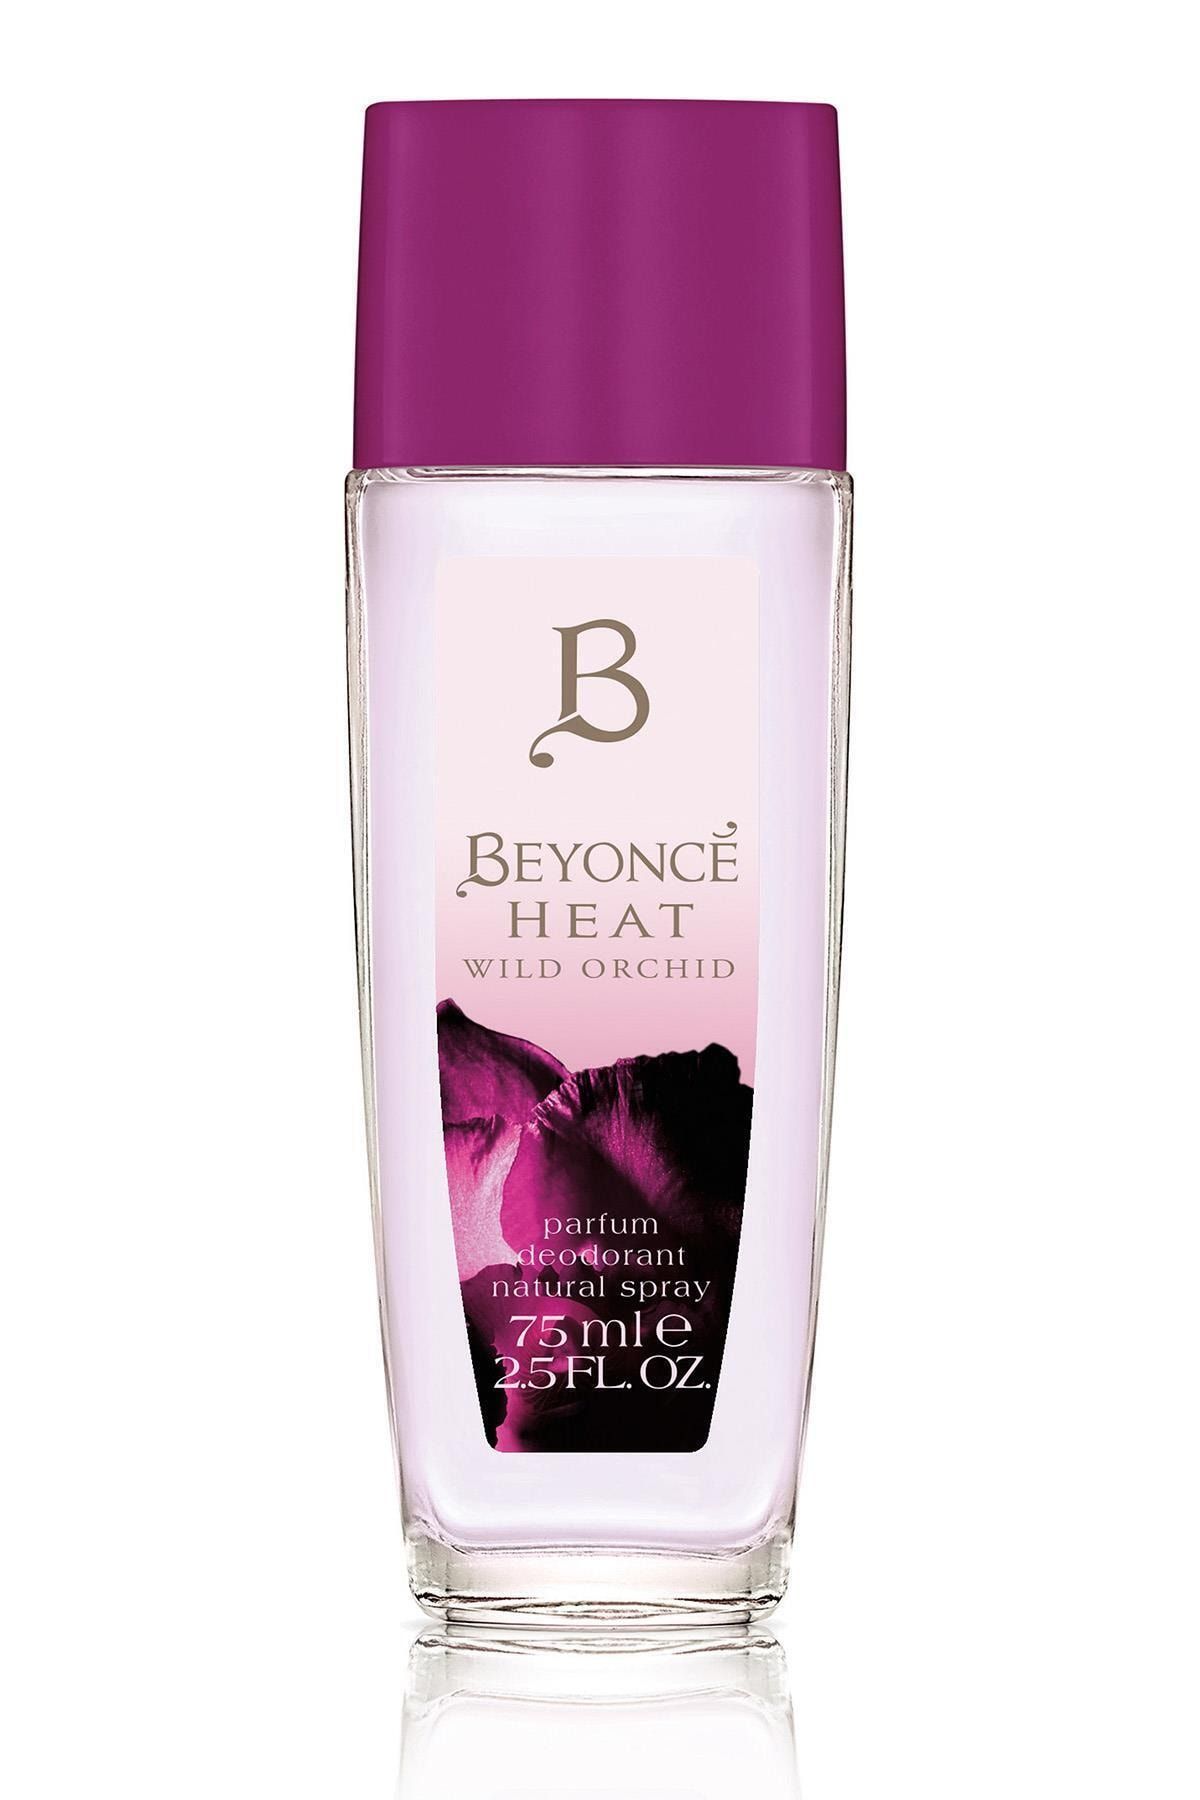 Beyonce Unisex Heat Wild Orchid Deodorant 75 Ml